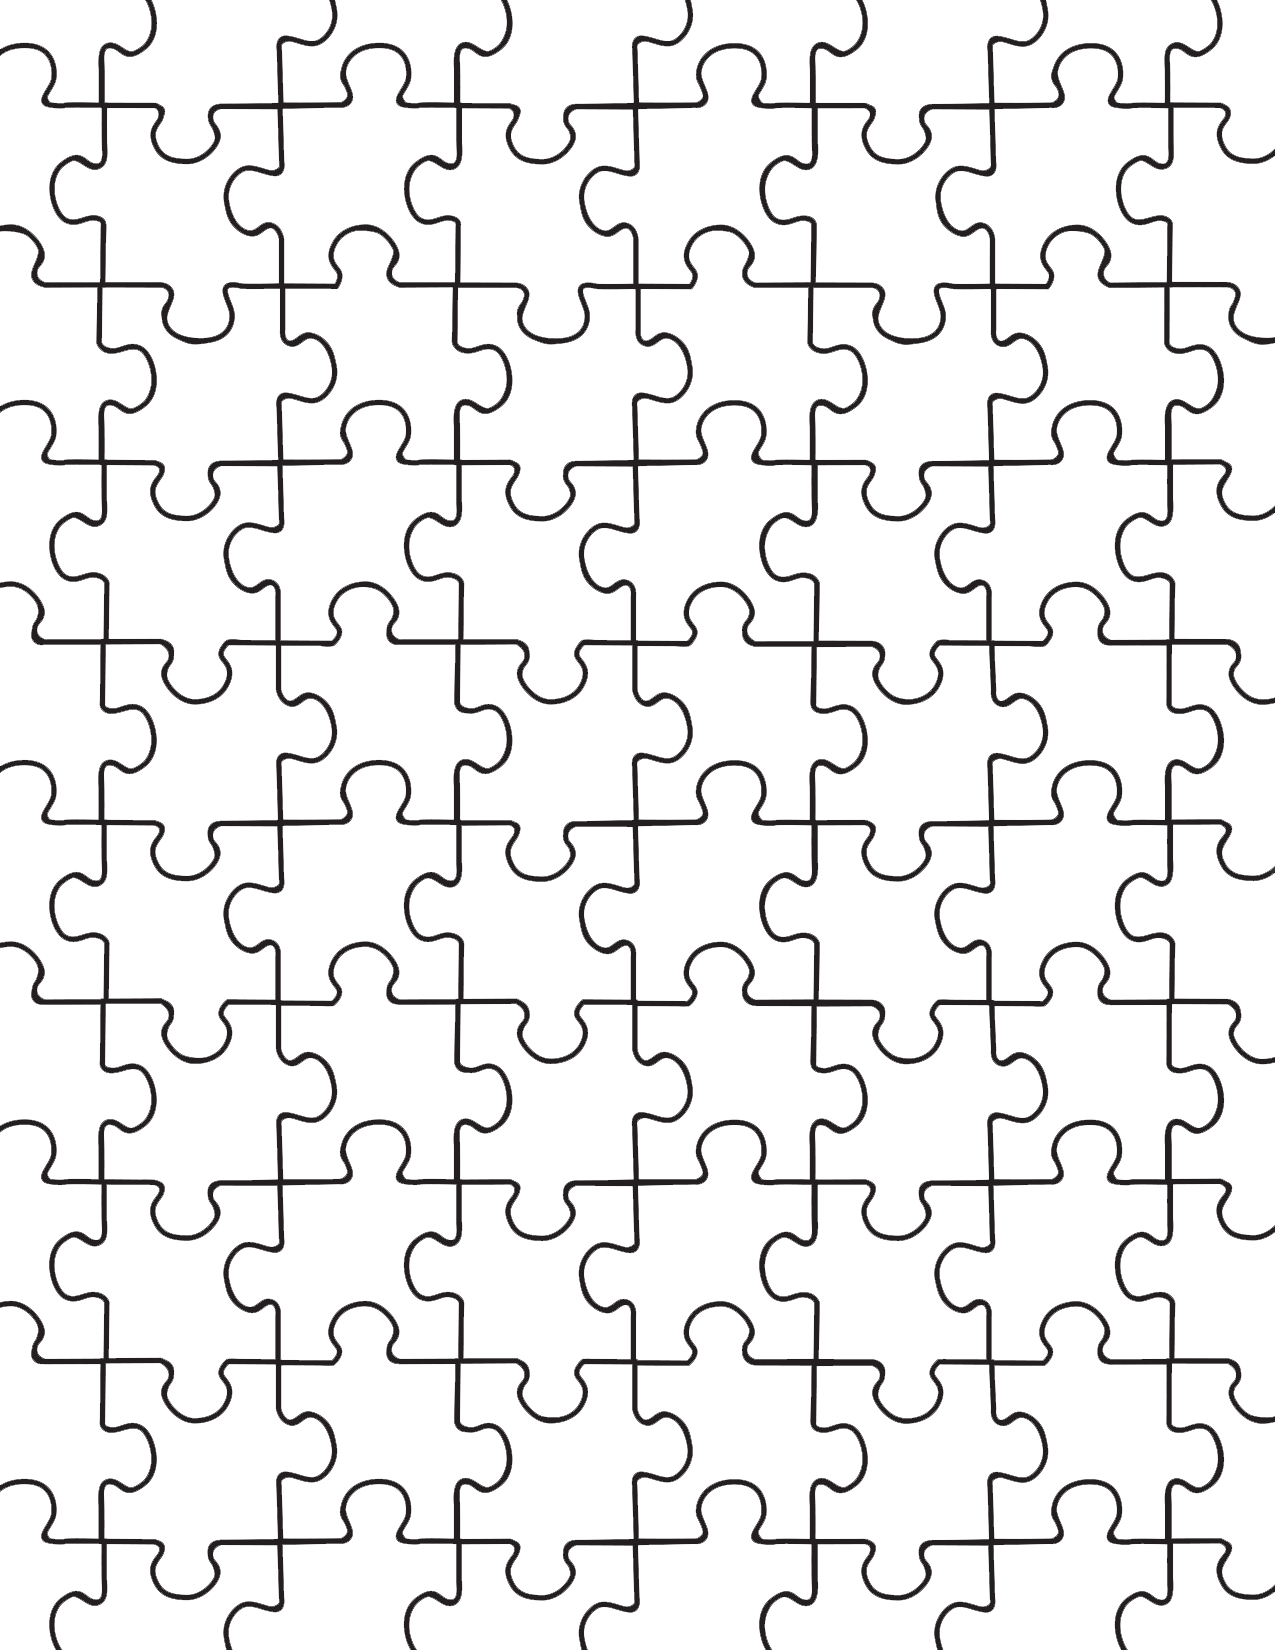 174155-1275x1650-Puzzle-pieces 